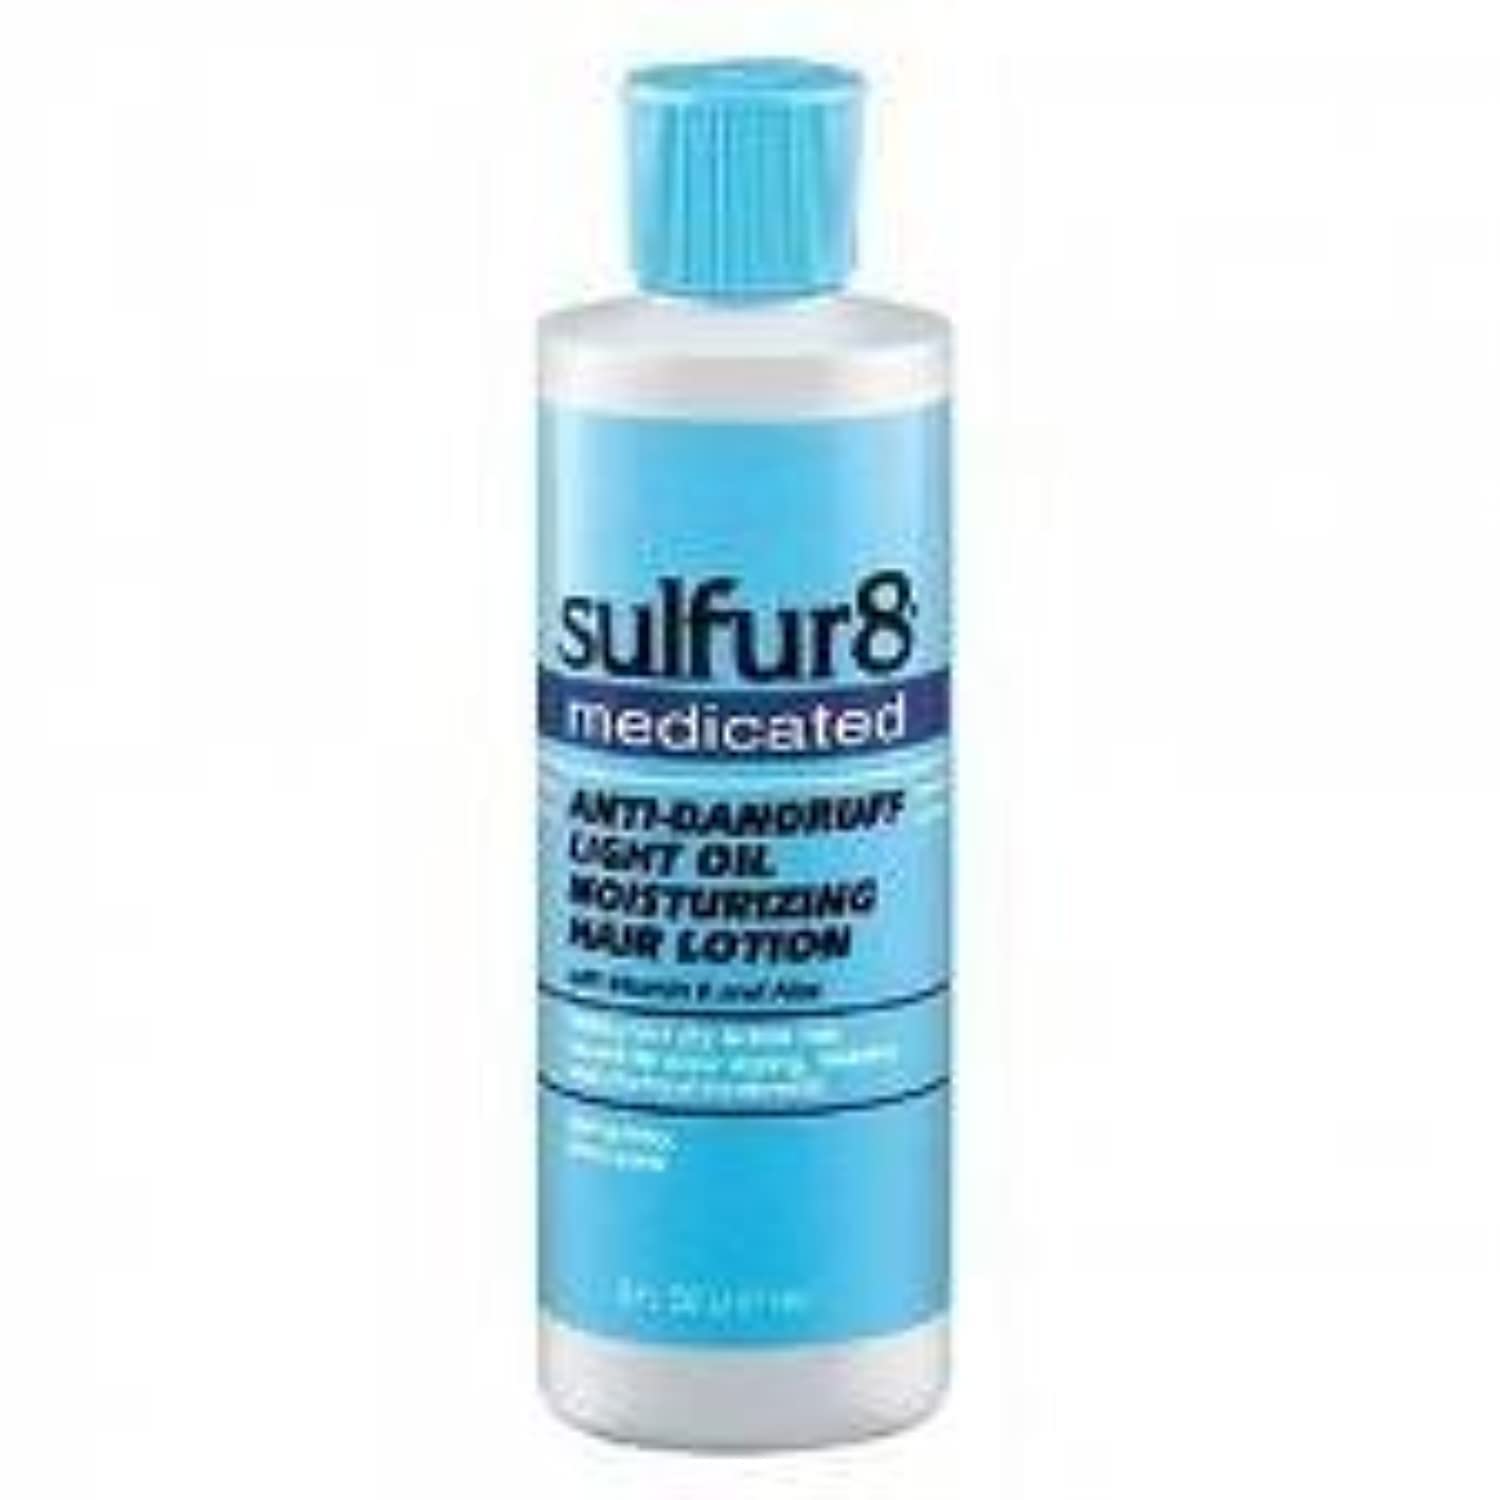 Sulfur 8 Medicated Anti-dandruff Light Oil [...]